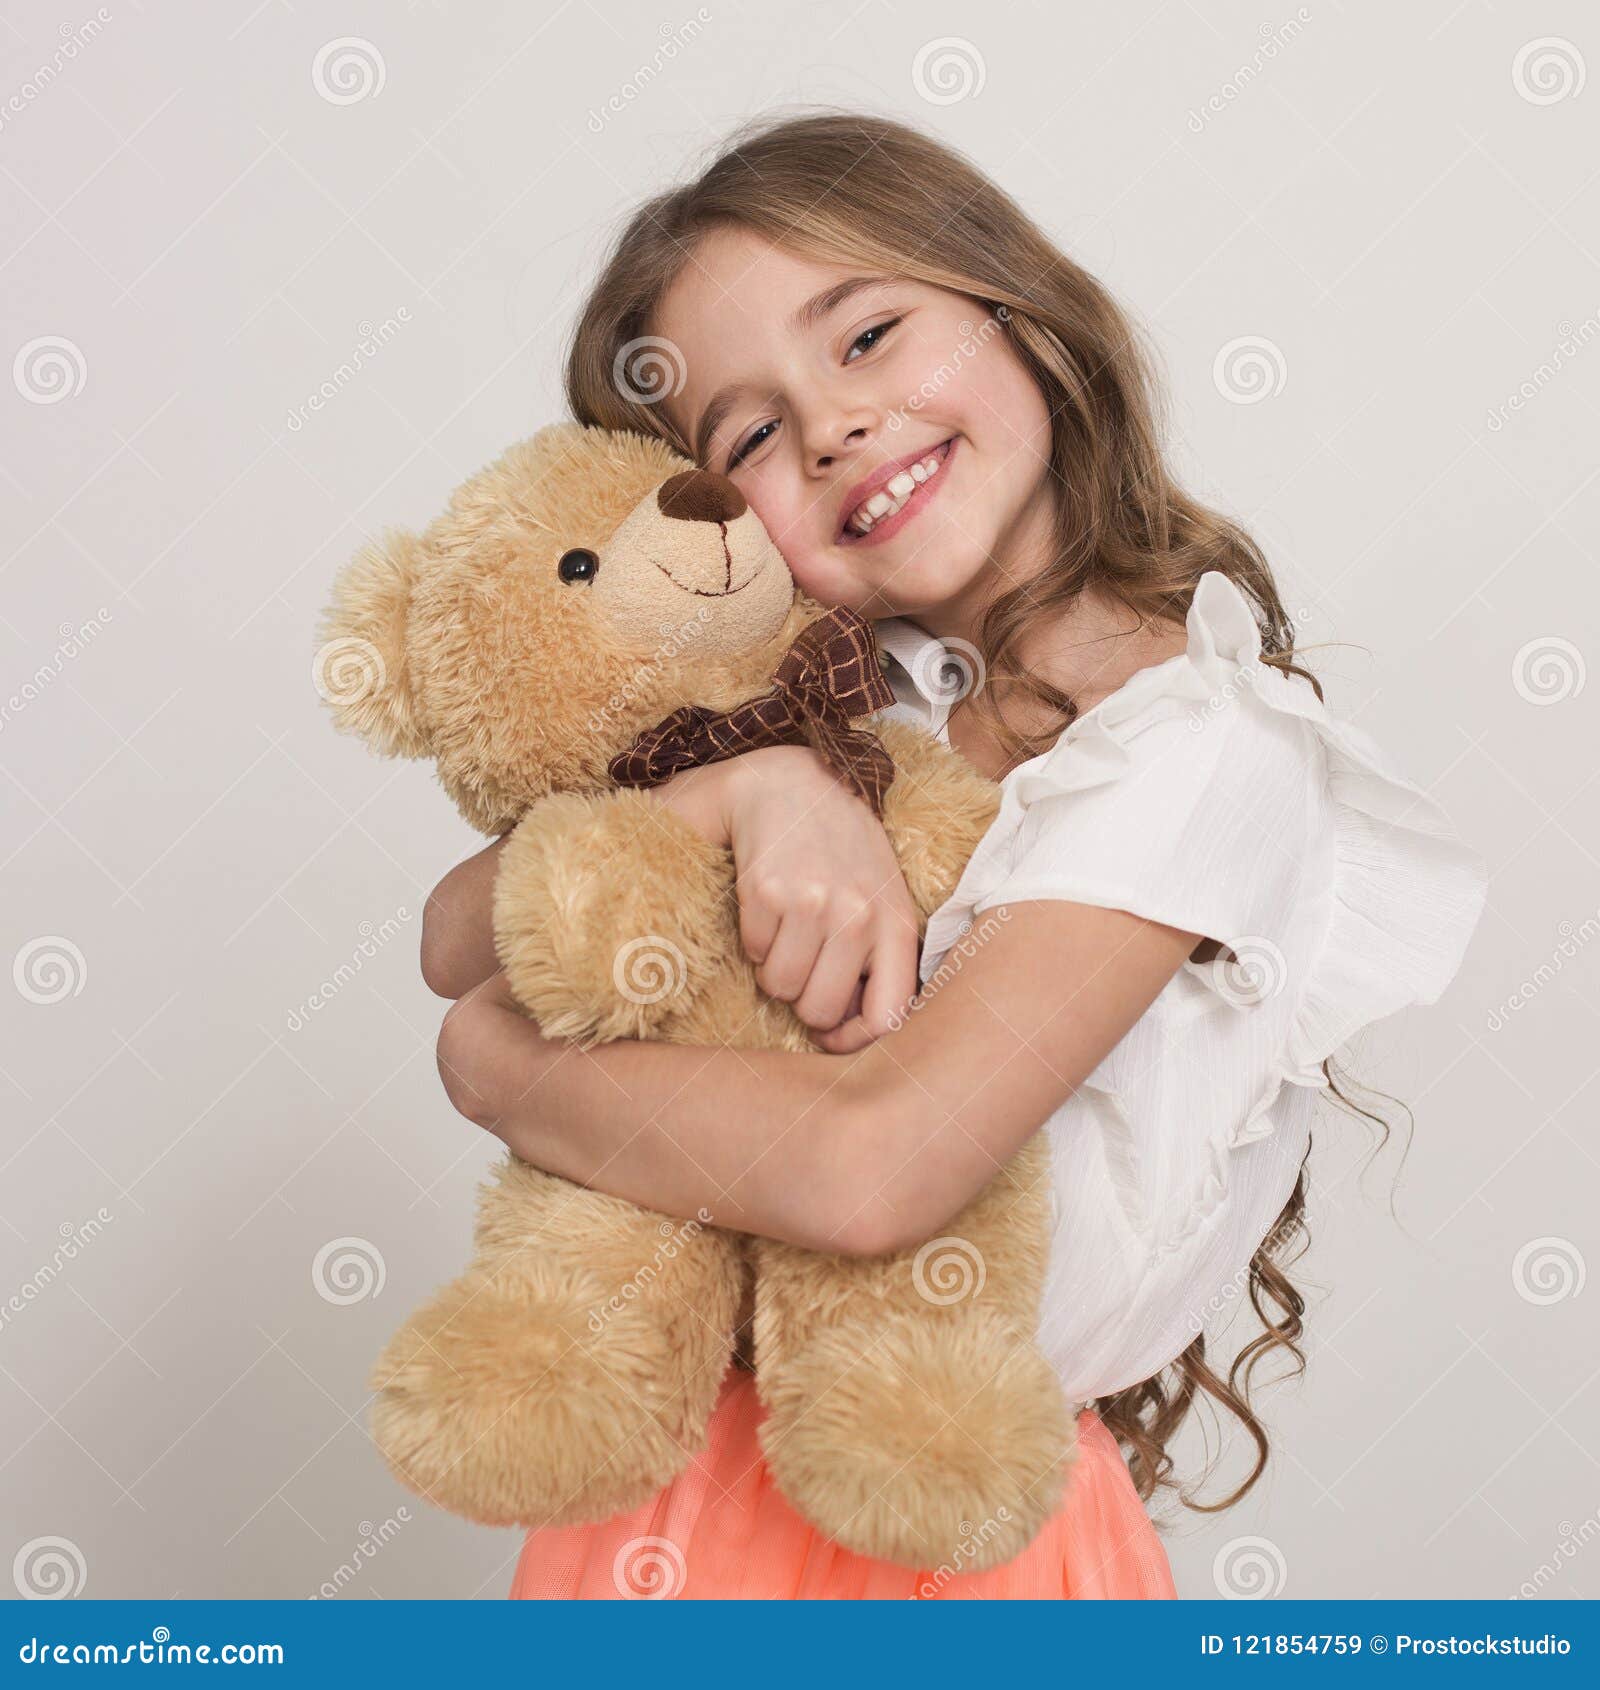 Adorable Little Girl Hugging Teddy Bear Stock Image - Image of holding ...